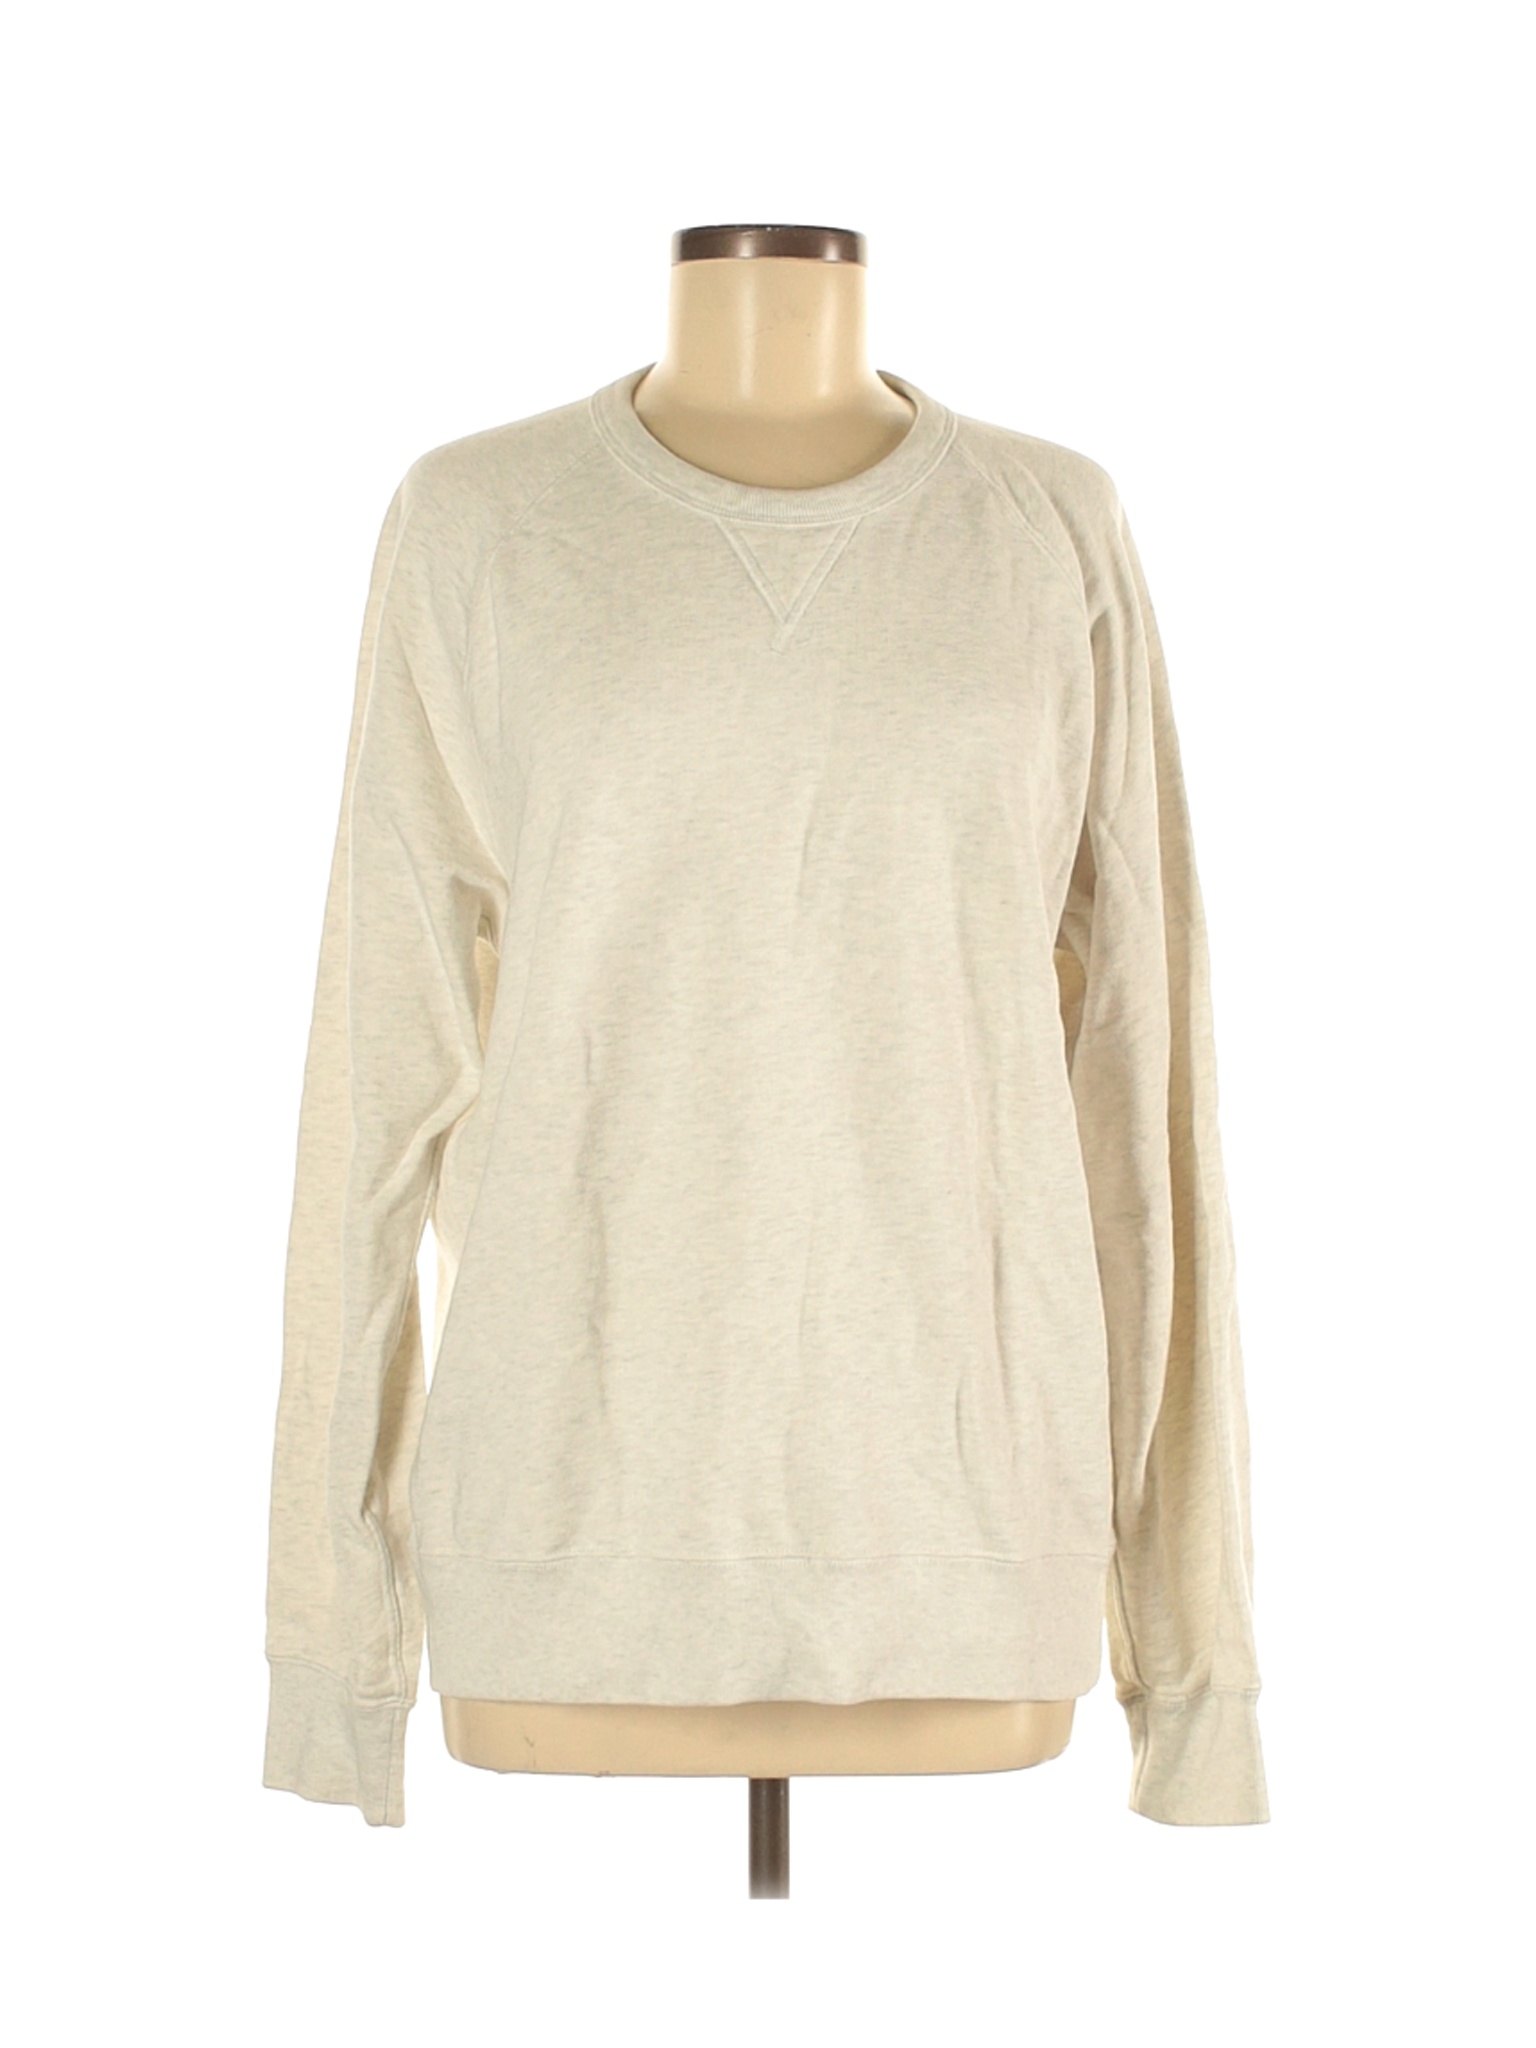 Uniqlo Women Ivory Sweatshirt M | eBay